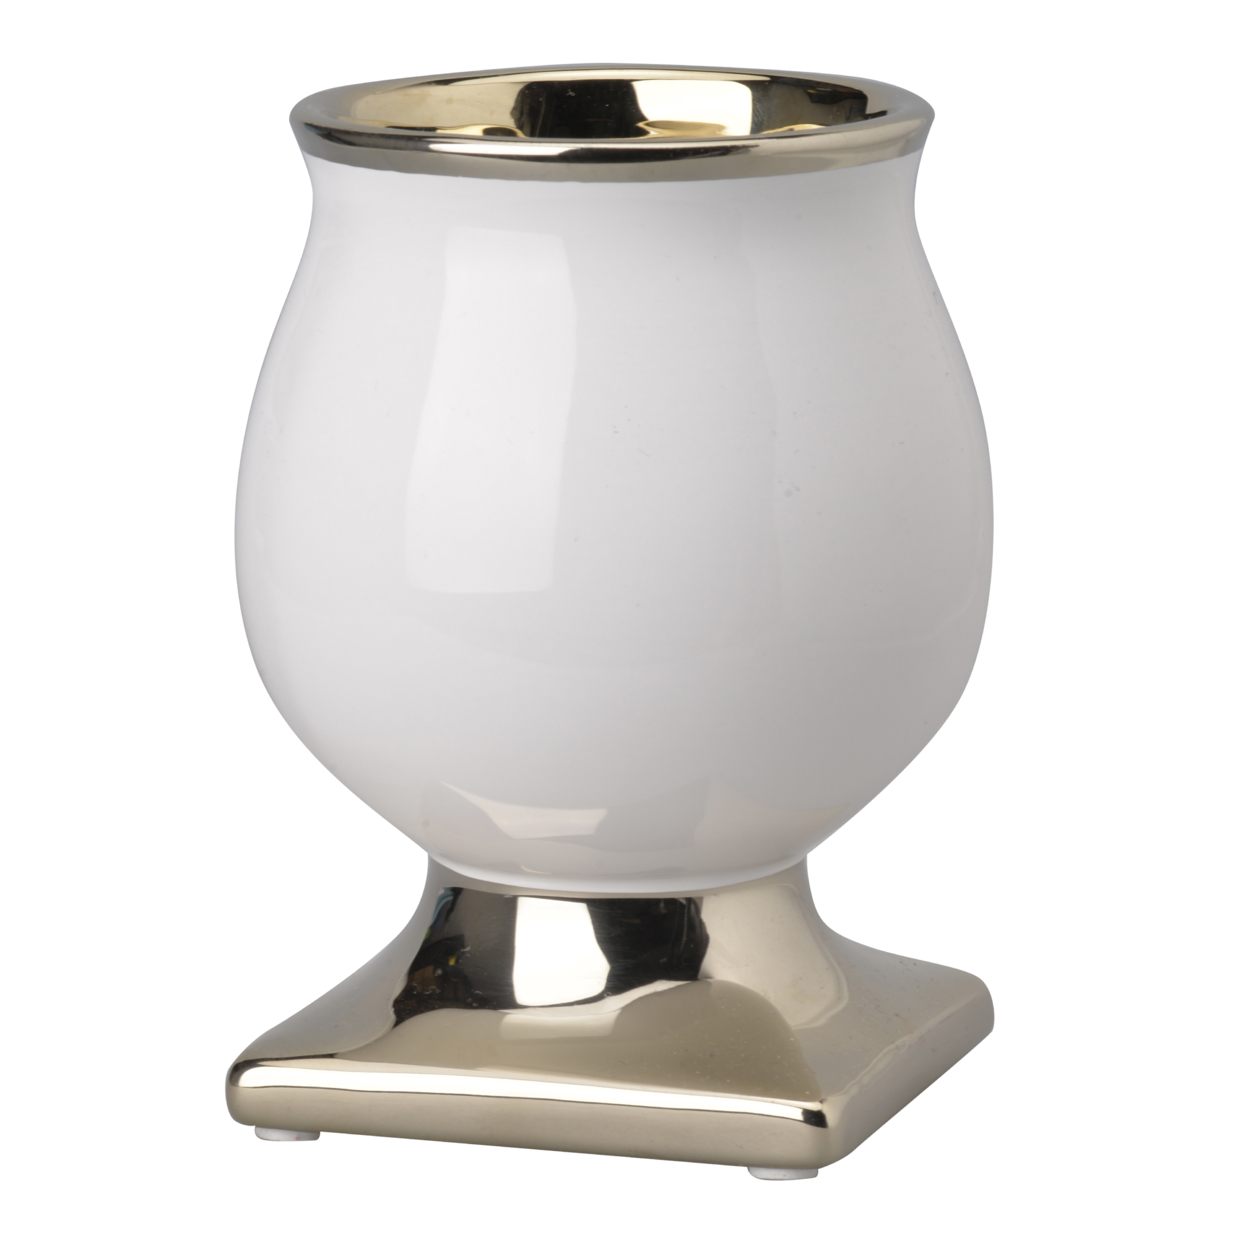 Bellied Shape Ceramic Vase With Pedestal Base, Large, White And Gold- Saltoro Sherpi